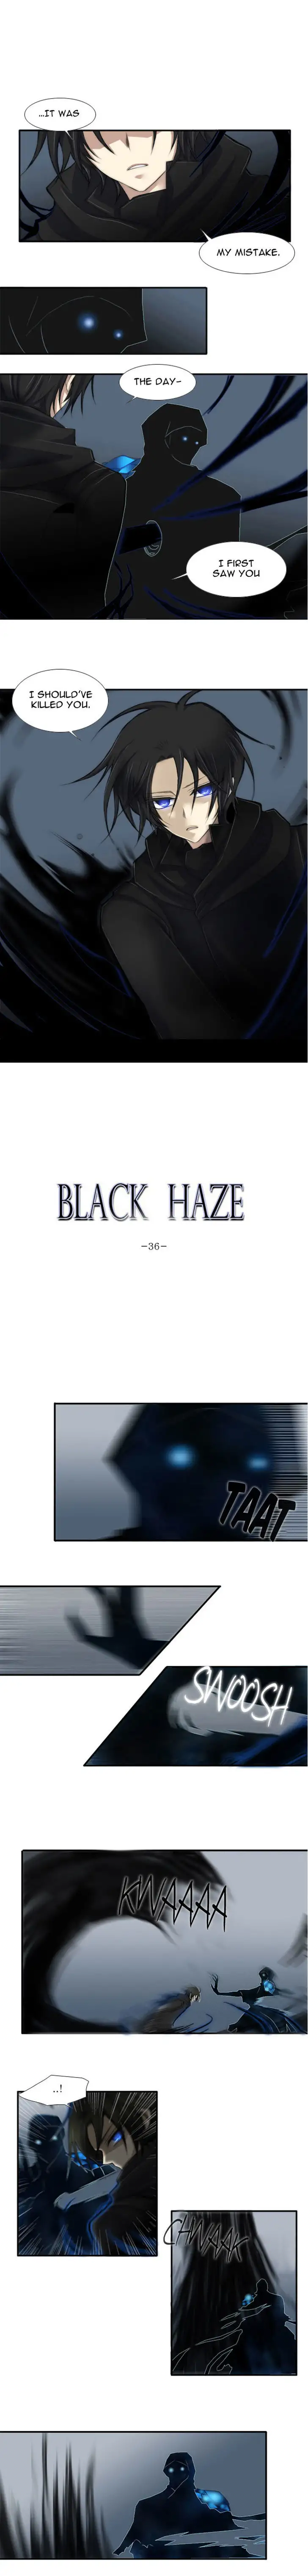 Black Haze - Chapter 36 Page 2